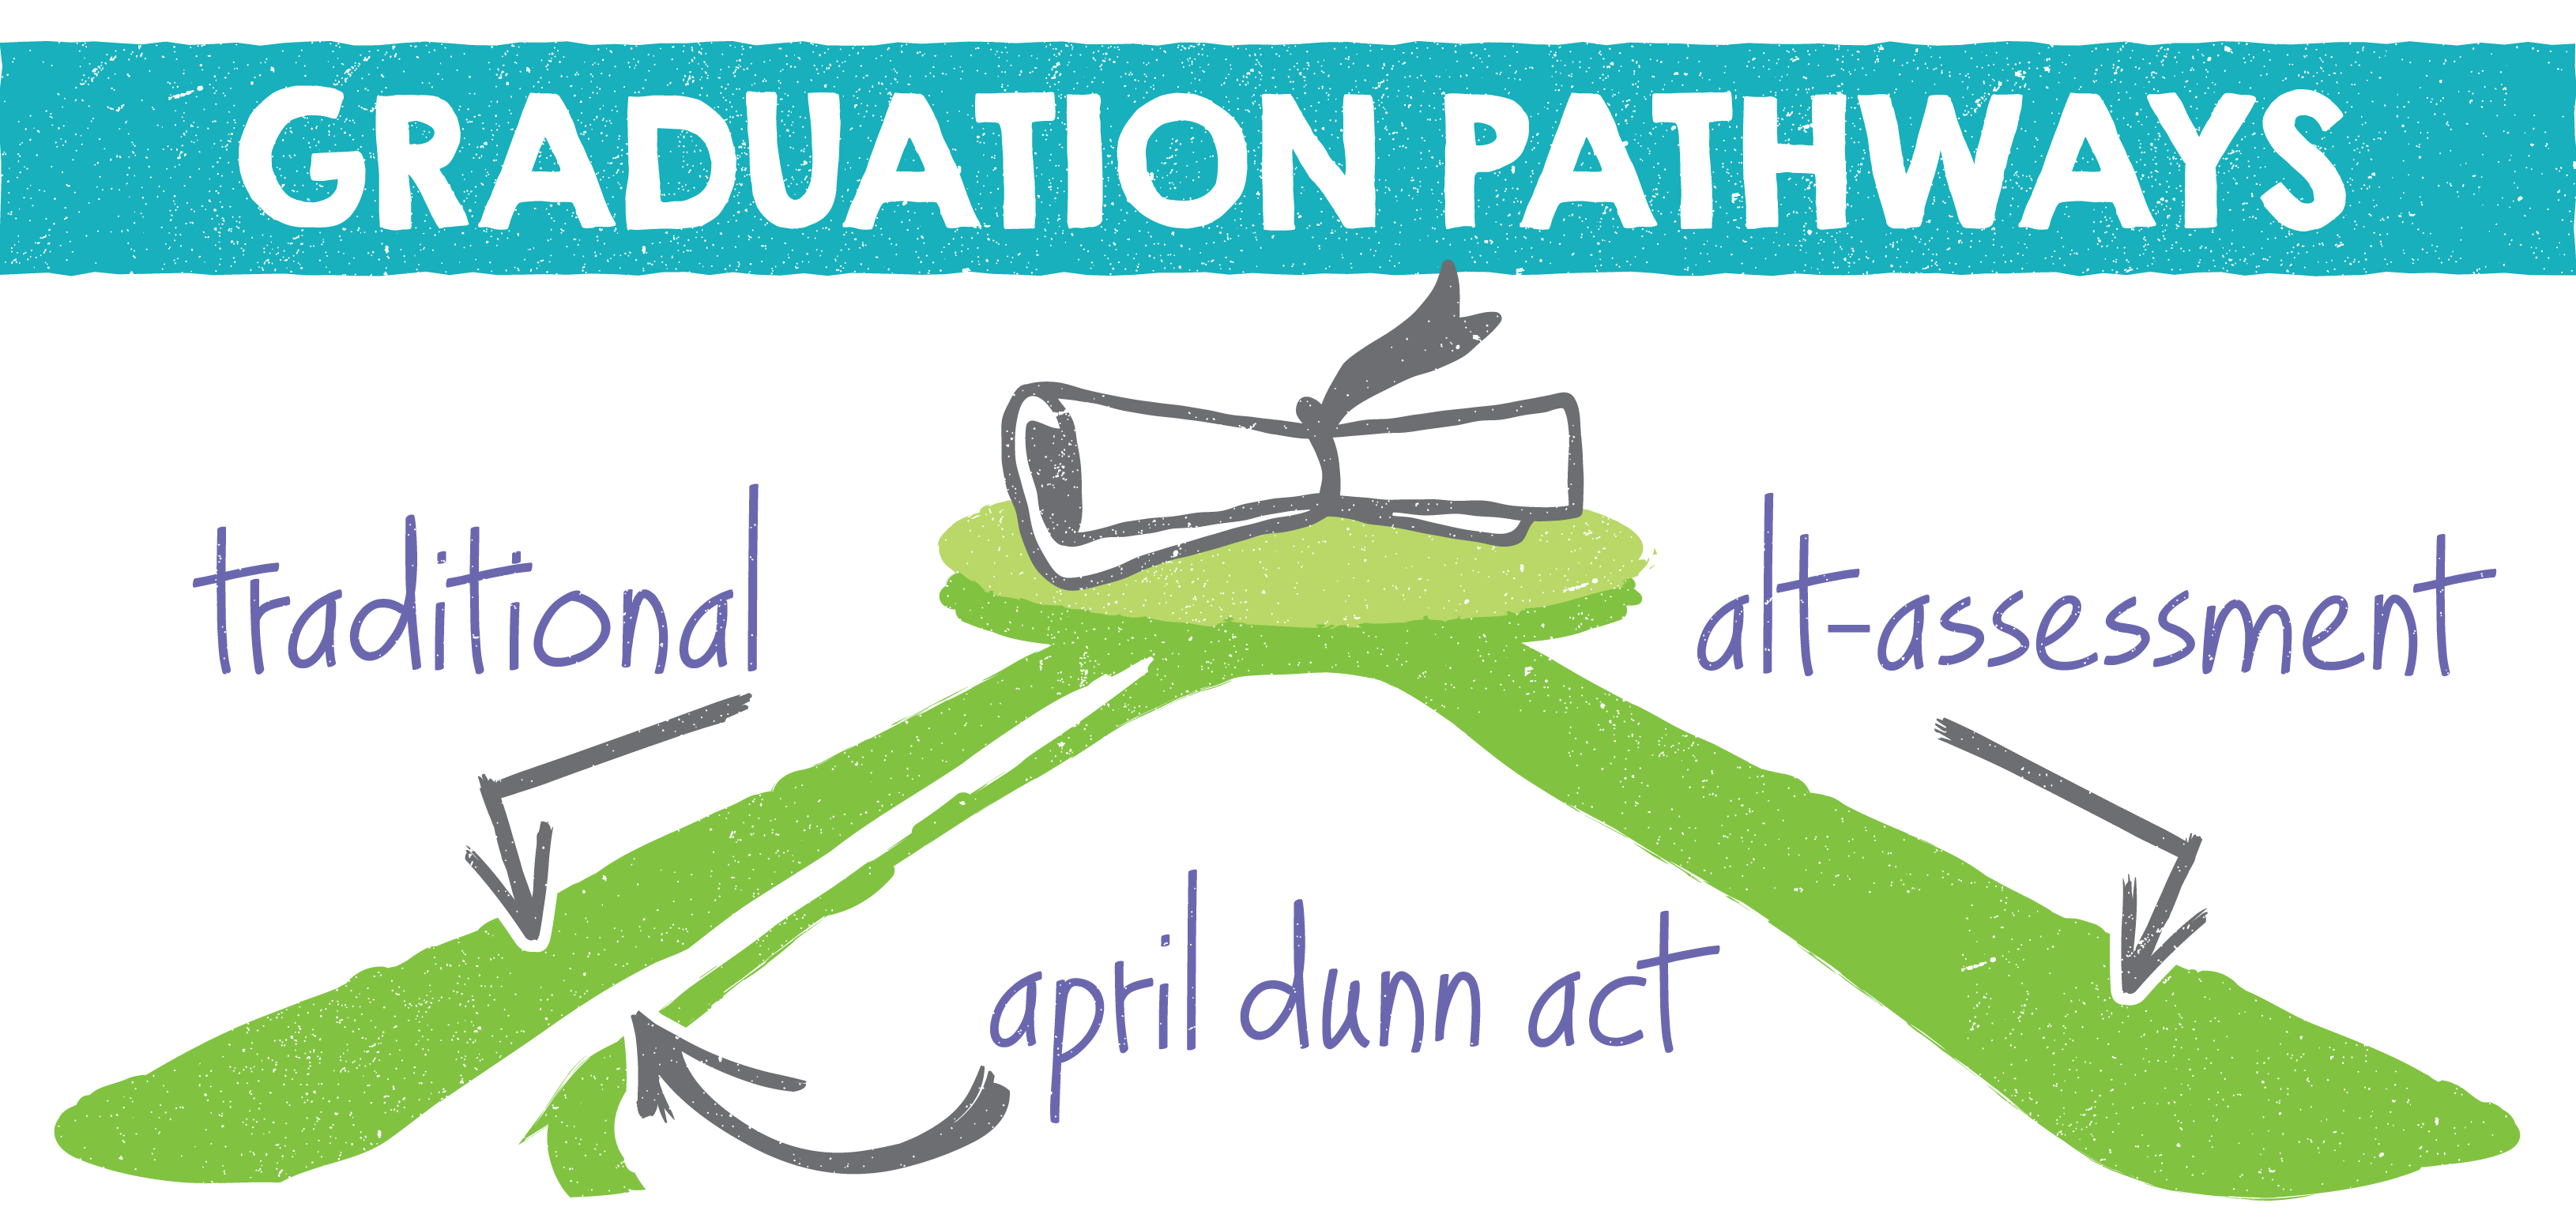 Graduation Pathways - Traditional - 833 Alternative - ALT-Assessment